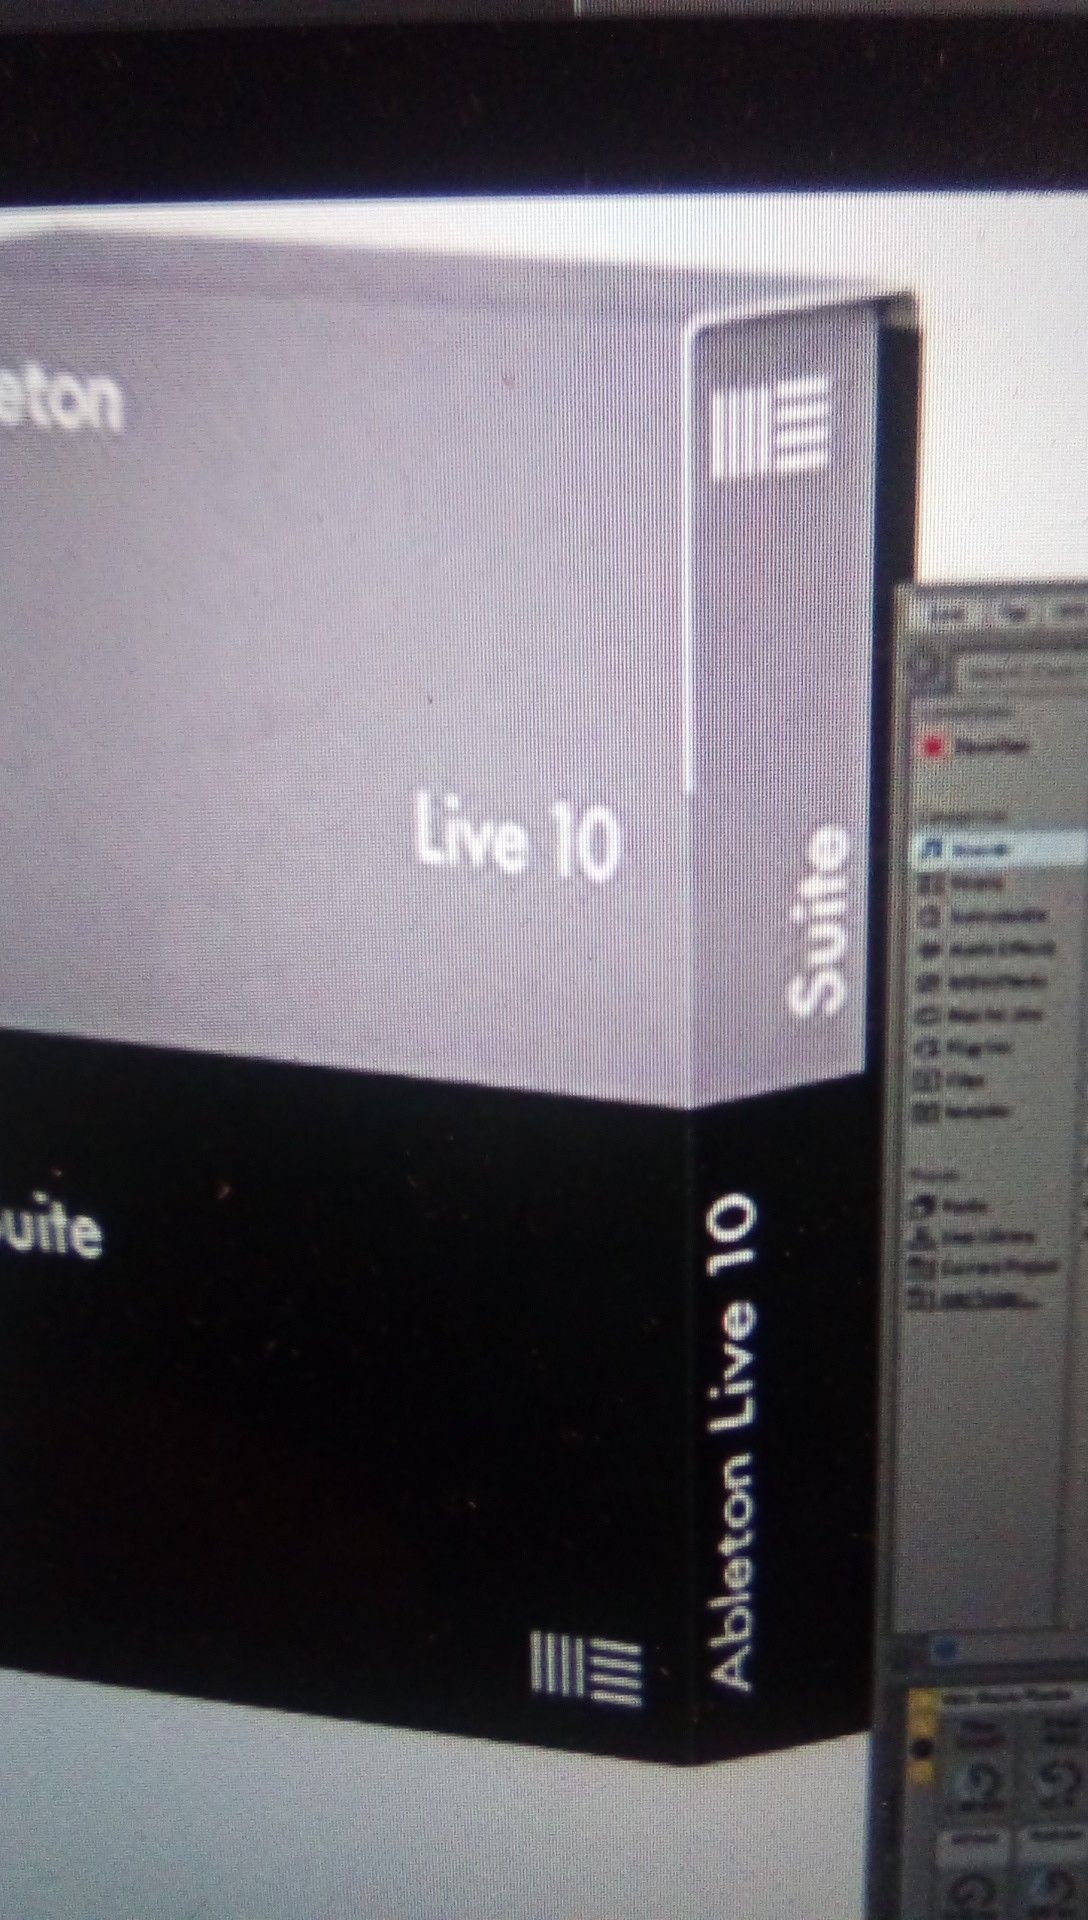 Ableton 10 live full version suite